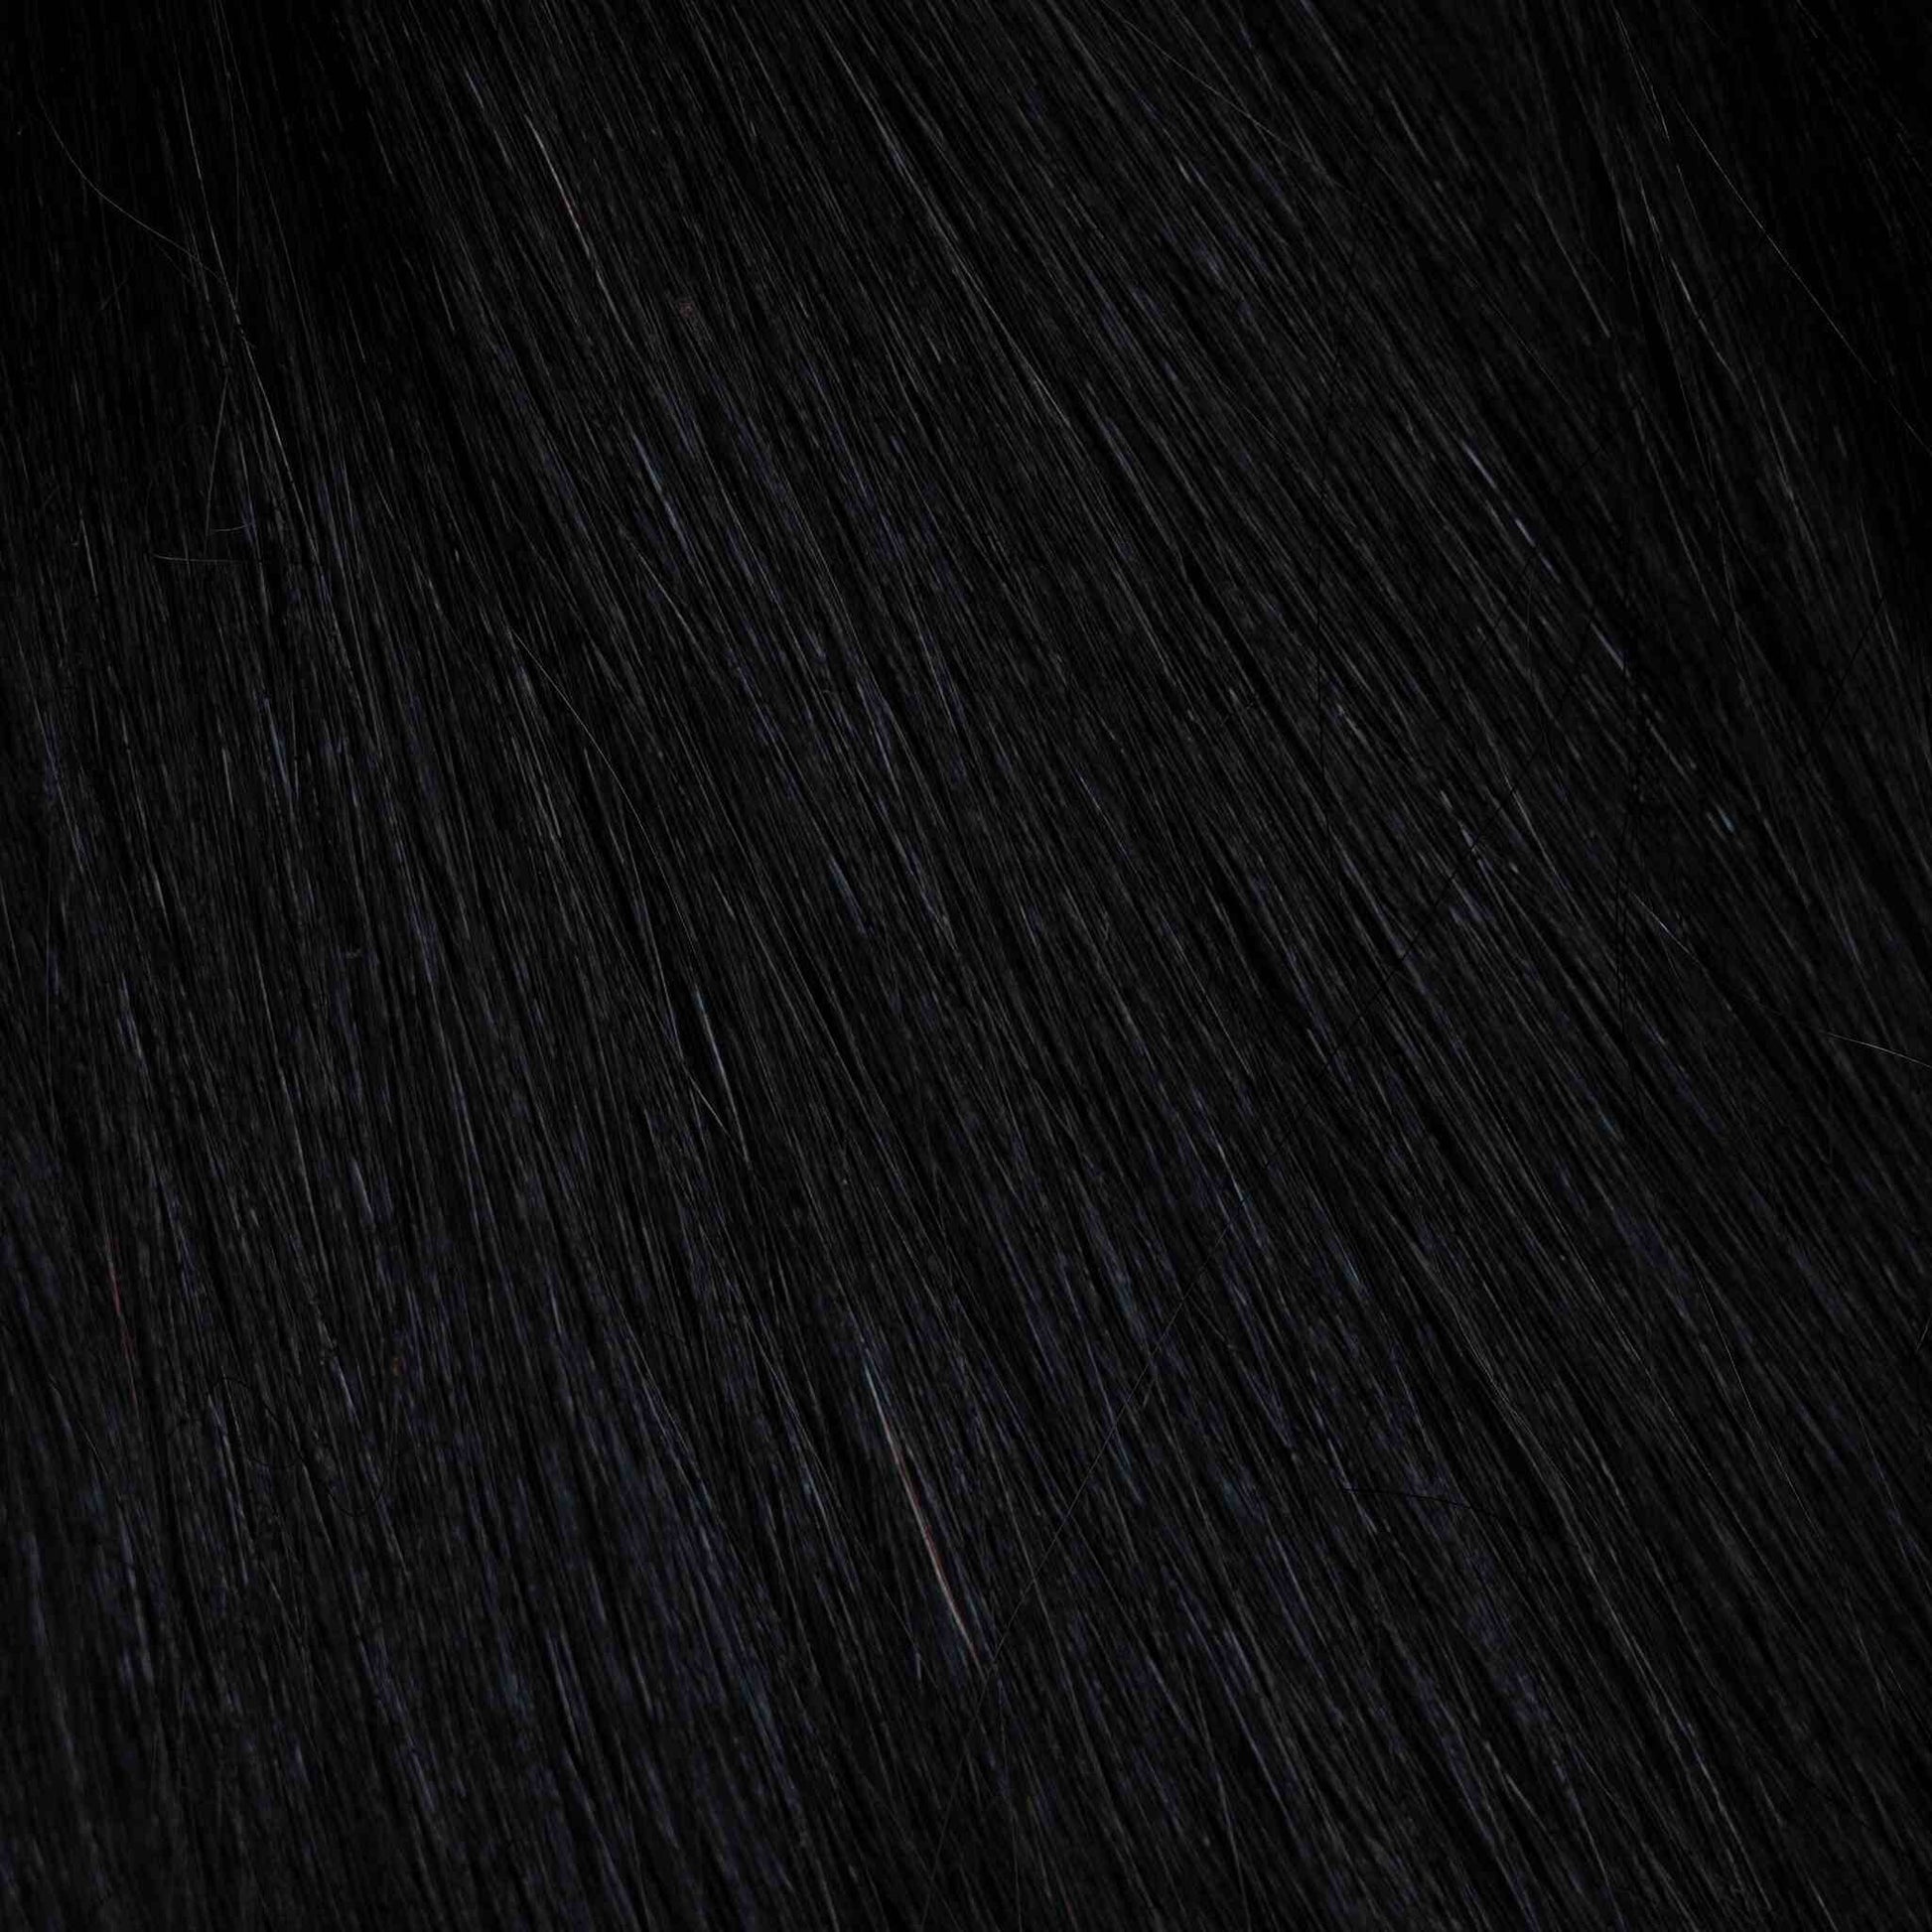 K-Tip 18" 25g Professional Hair Extensions - Jet Black #1